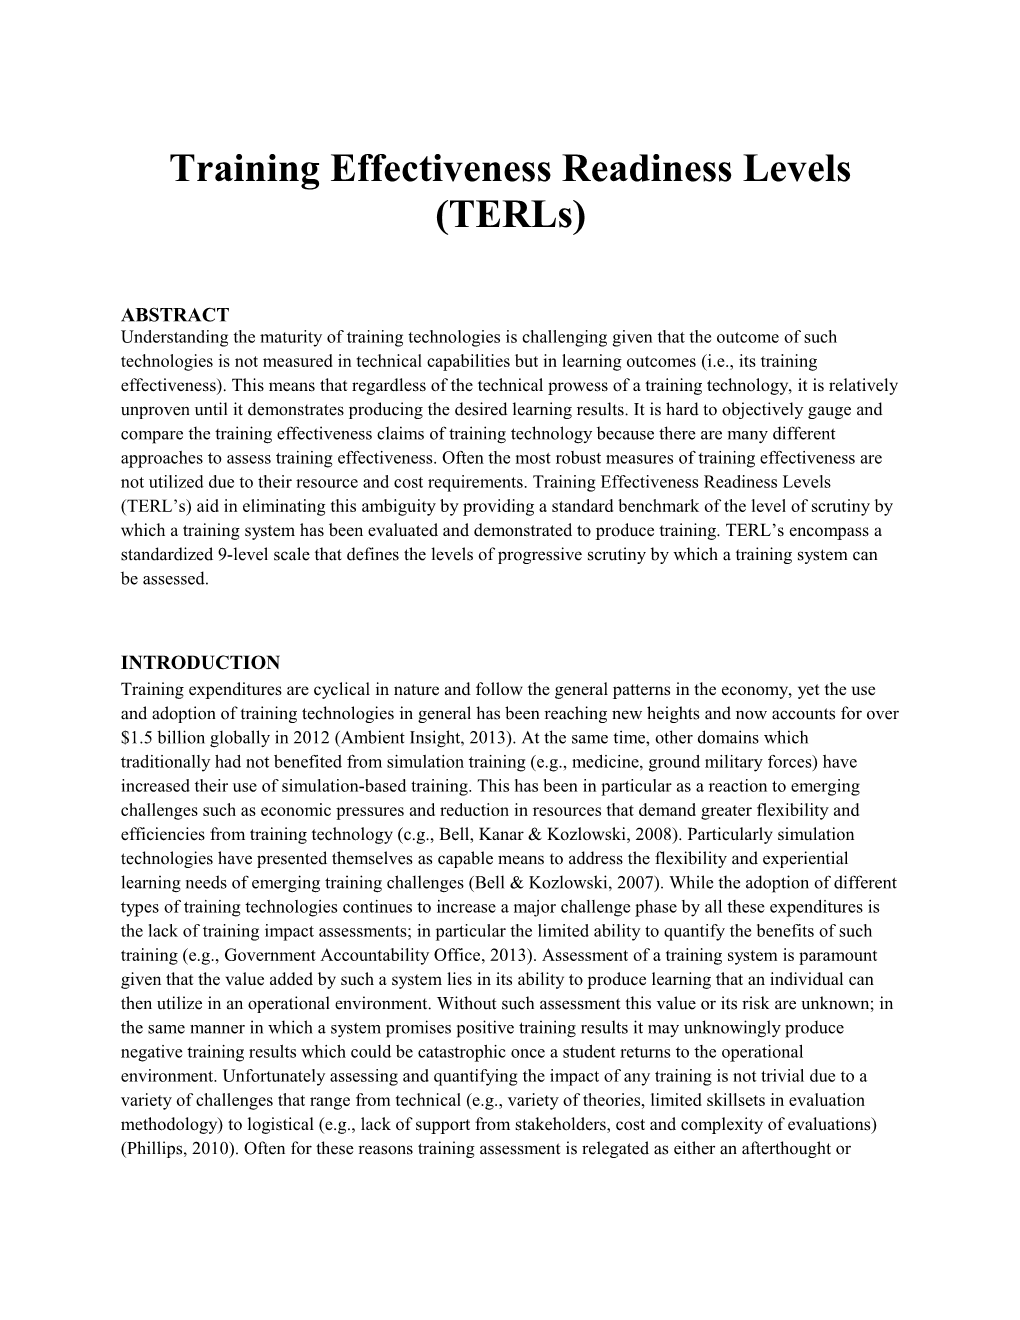 Training Effectiveness Readiness Levels (Terls)